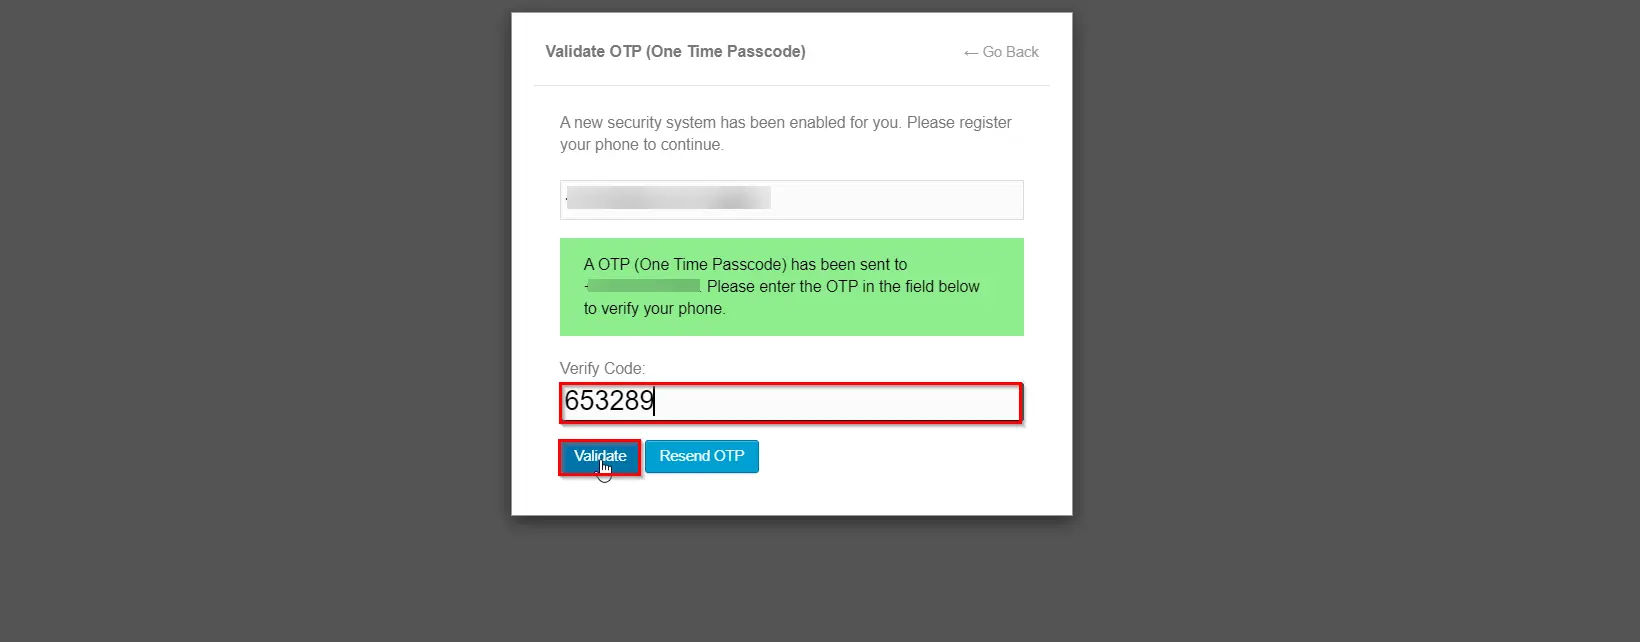 WordPress default login form - Enter verify code